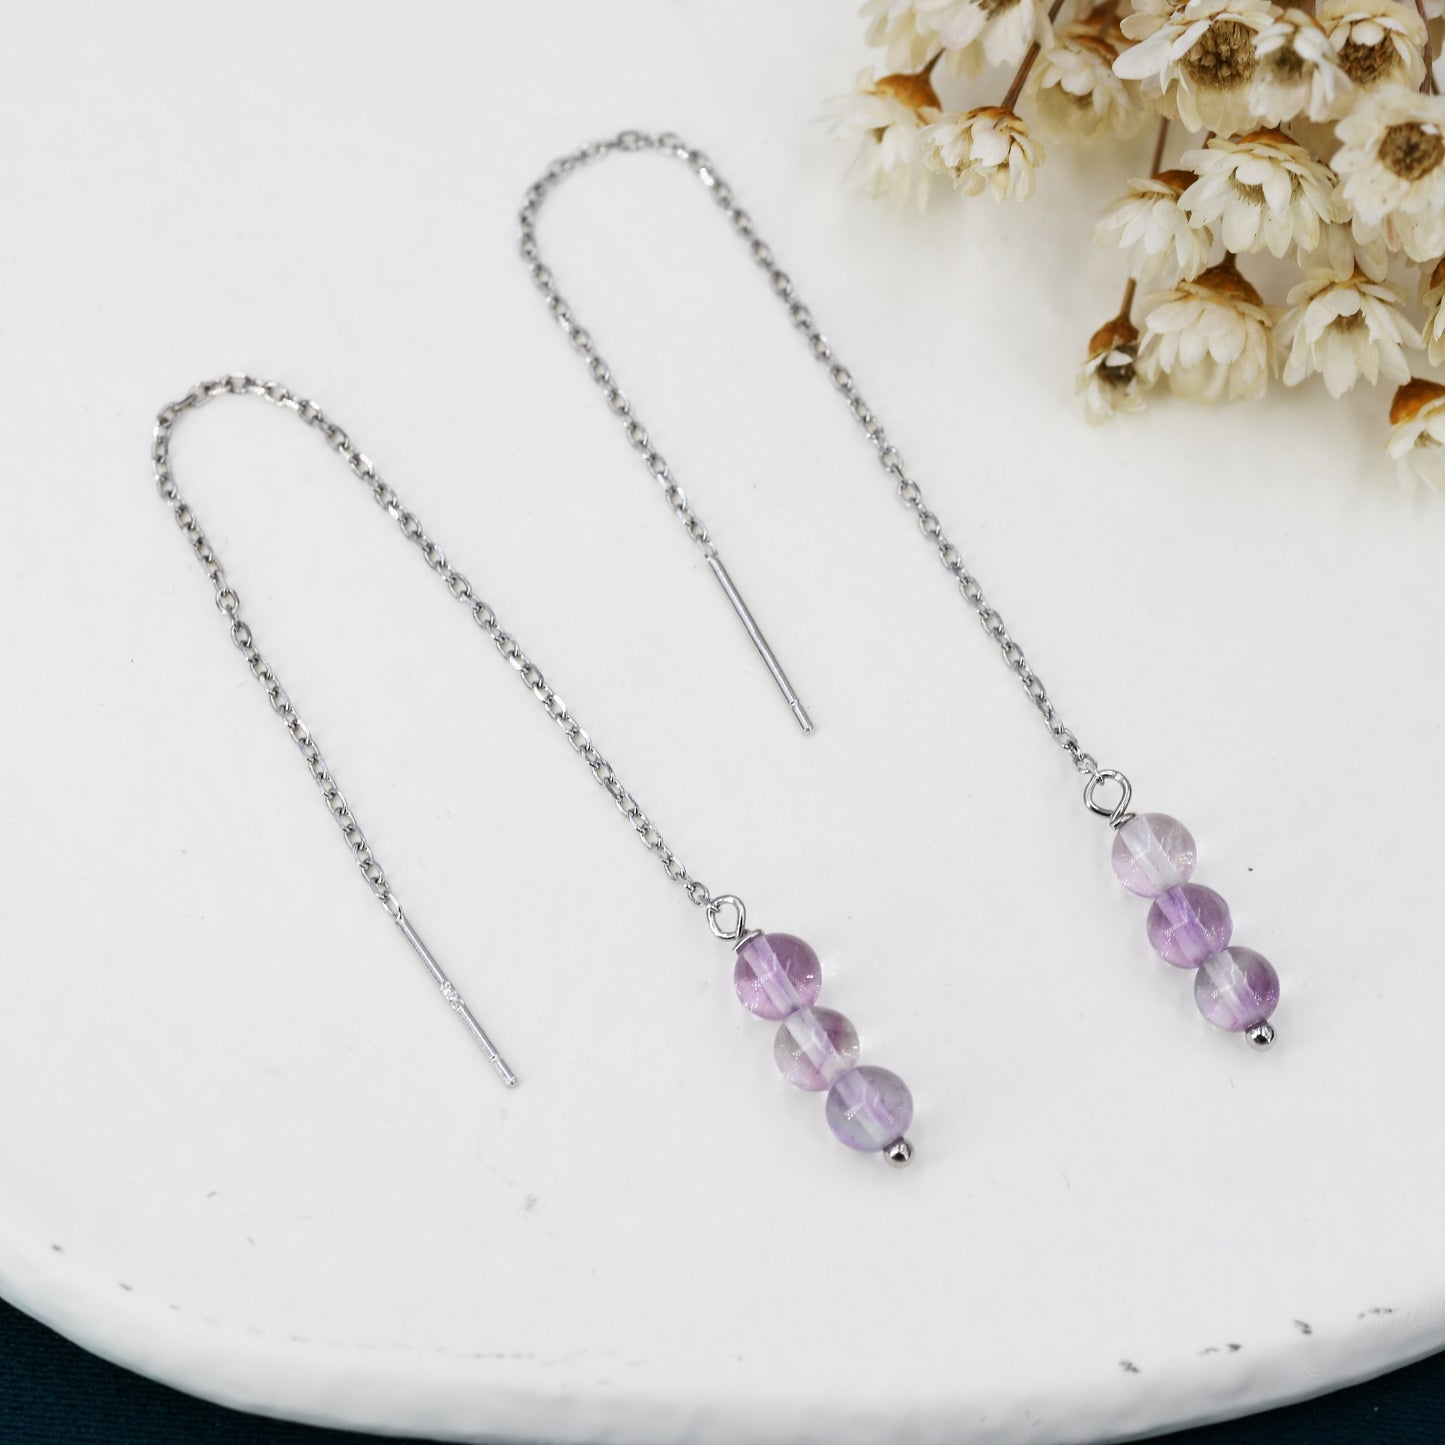 Genuine Purple Fluorite Trio Threader Earrings in Sterling Silver, Natural Fluorite Cluster Dangle Earrings, Three Stone Ear Threaders